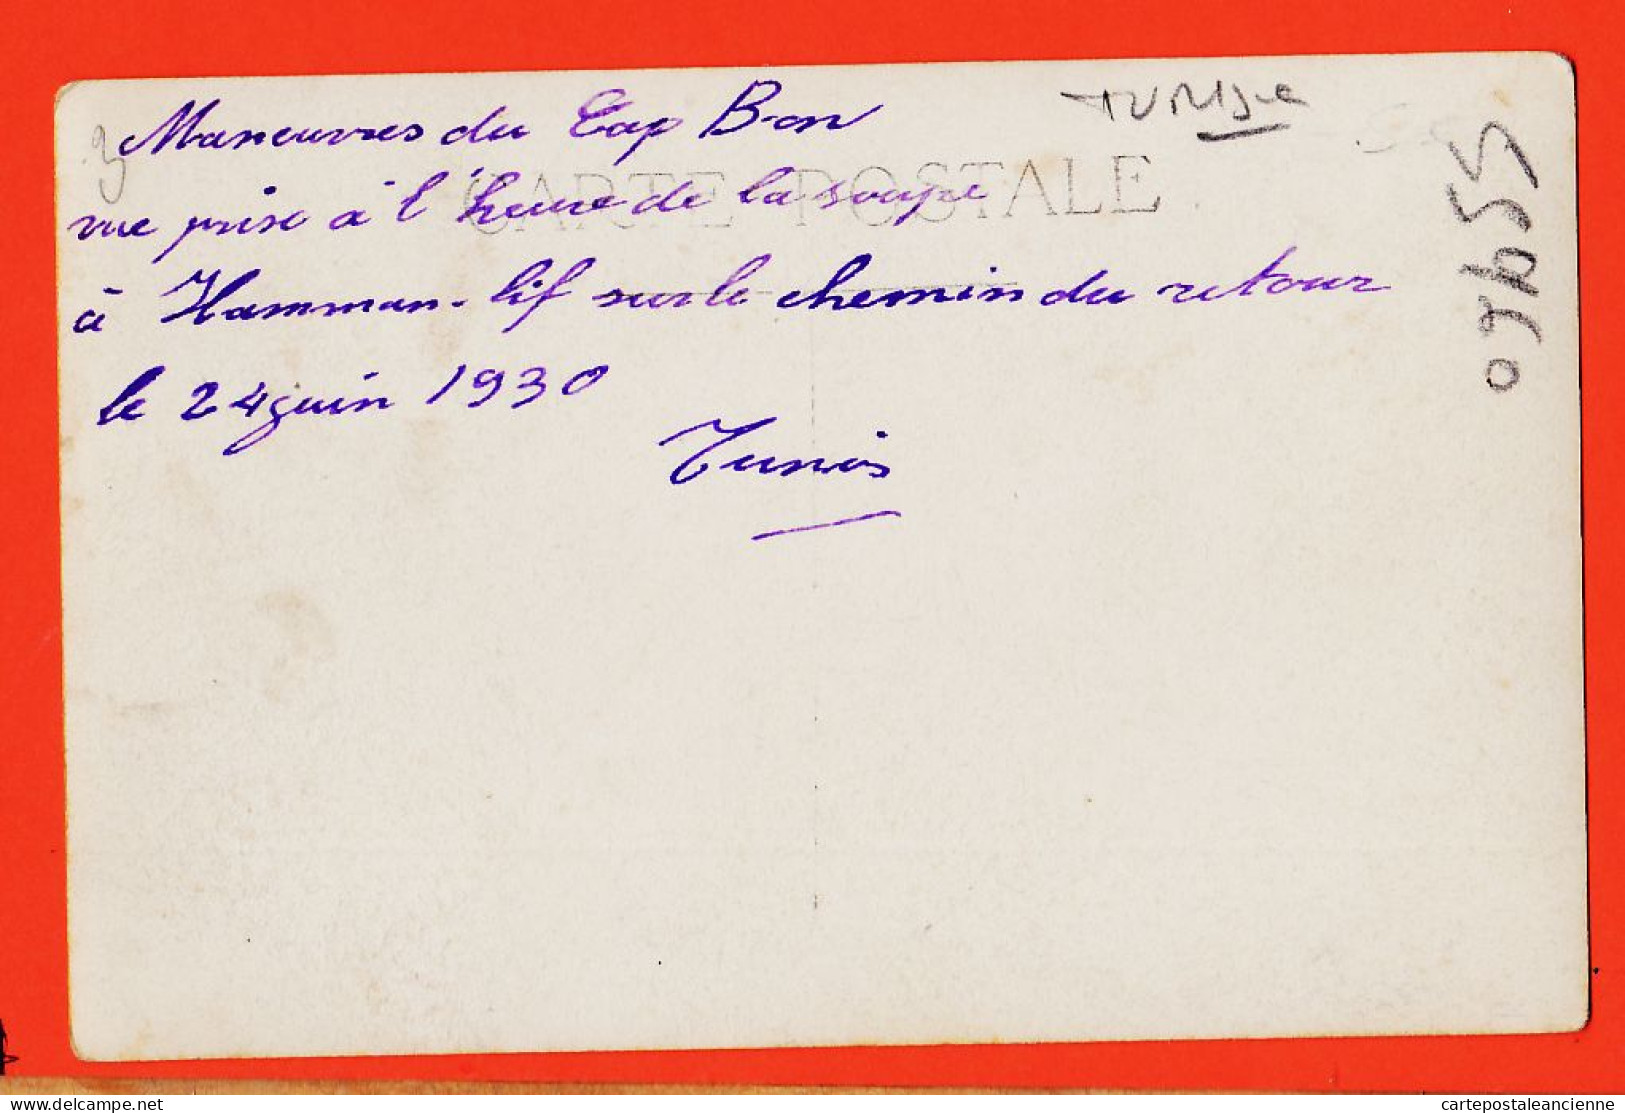 07888 ● Rare Carte-Photo (1) HAMMAN-LIF Cap BON Tunisie Manoeuvres 24 Juin 1930 Heure De La Soupe Chemin Retour - Tunesien